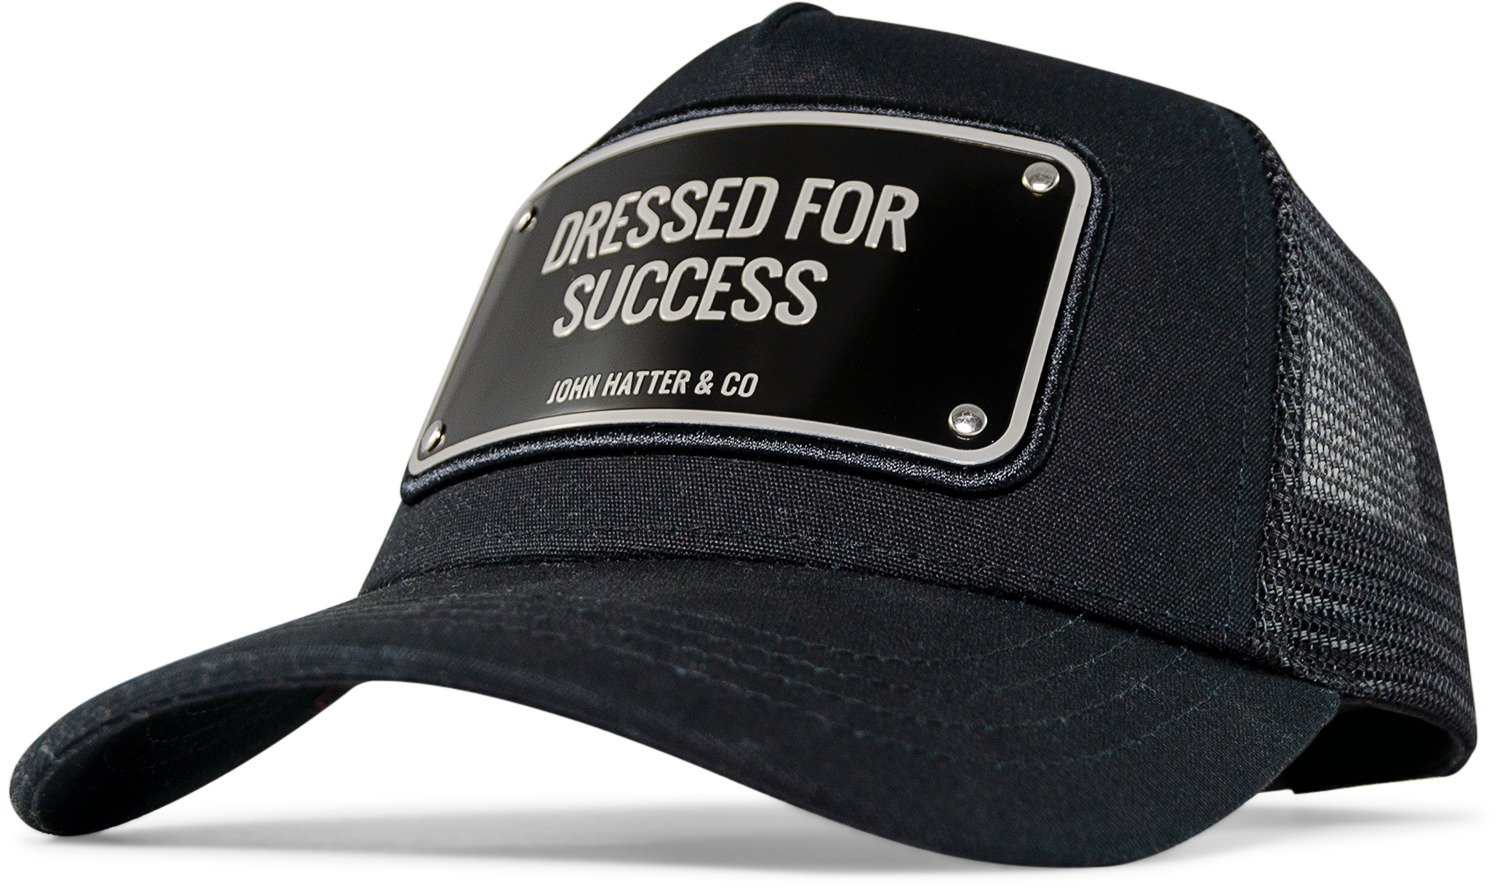 John Hatter & Co Dressed For Success Black Adjustable Trucker Cap Hat